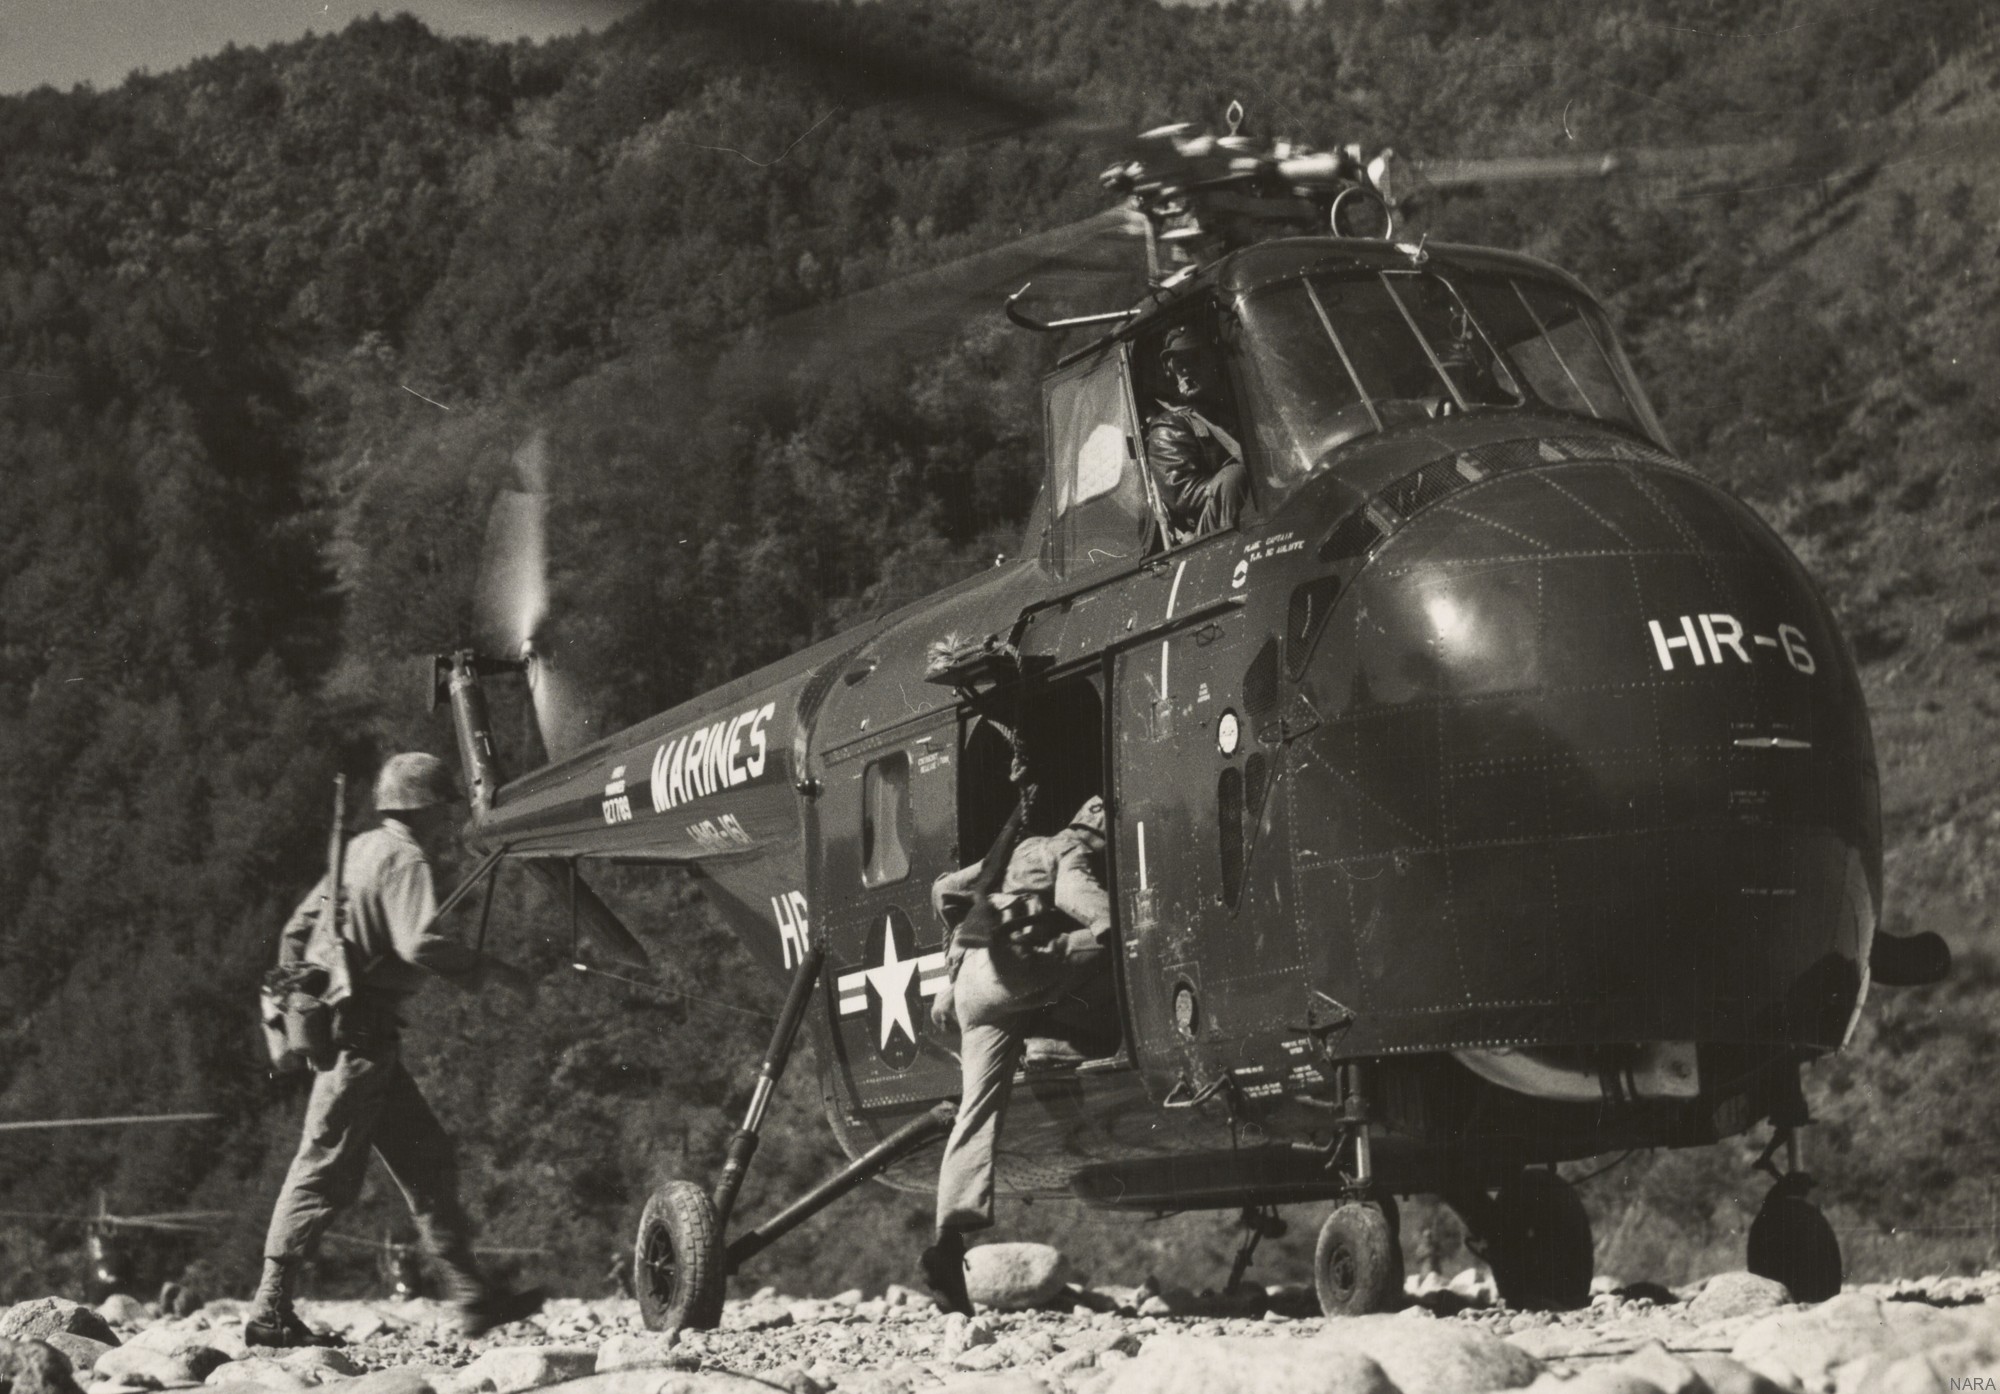 hmr-161 greyhawks marine helicopter transport squadron sikorsky hrs-1 usmc 32